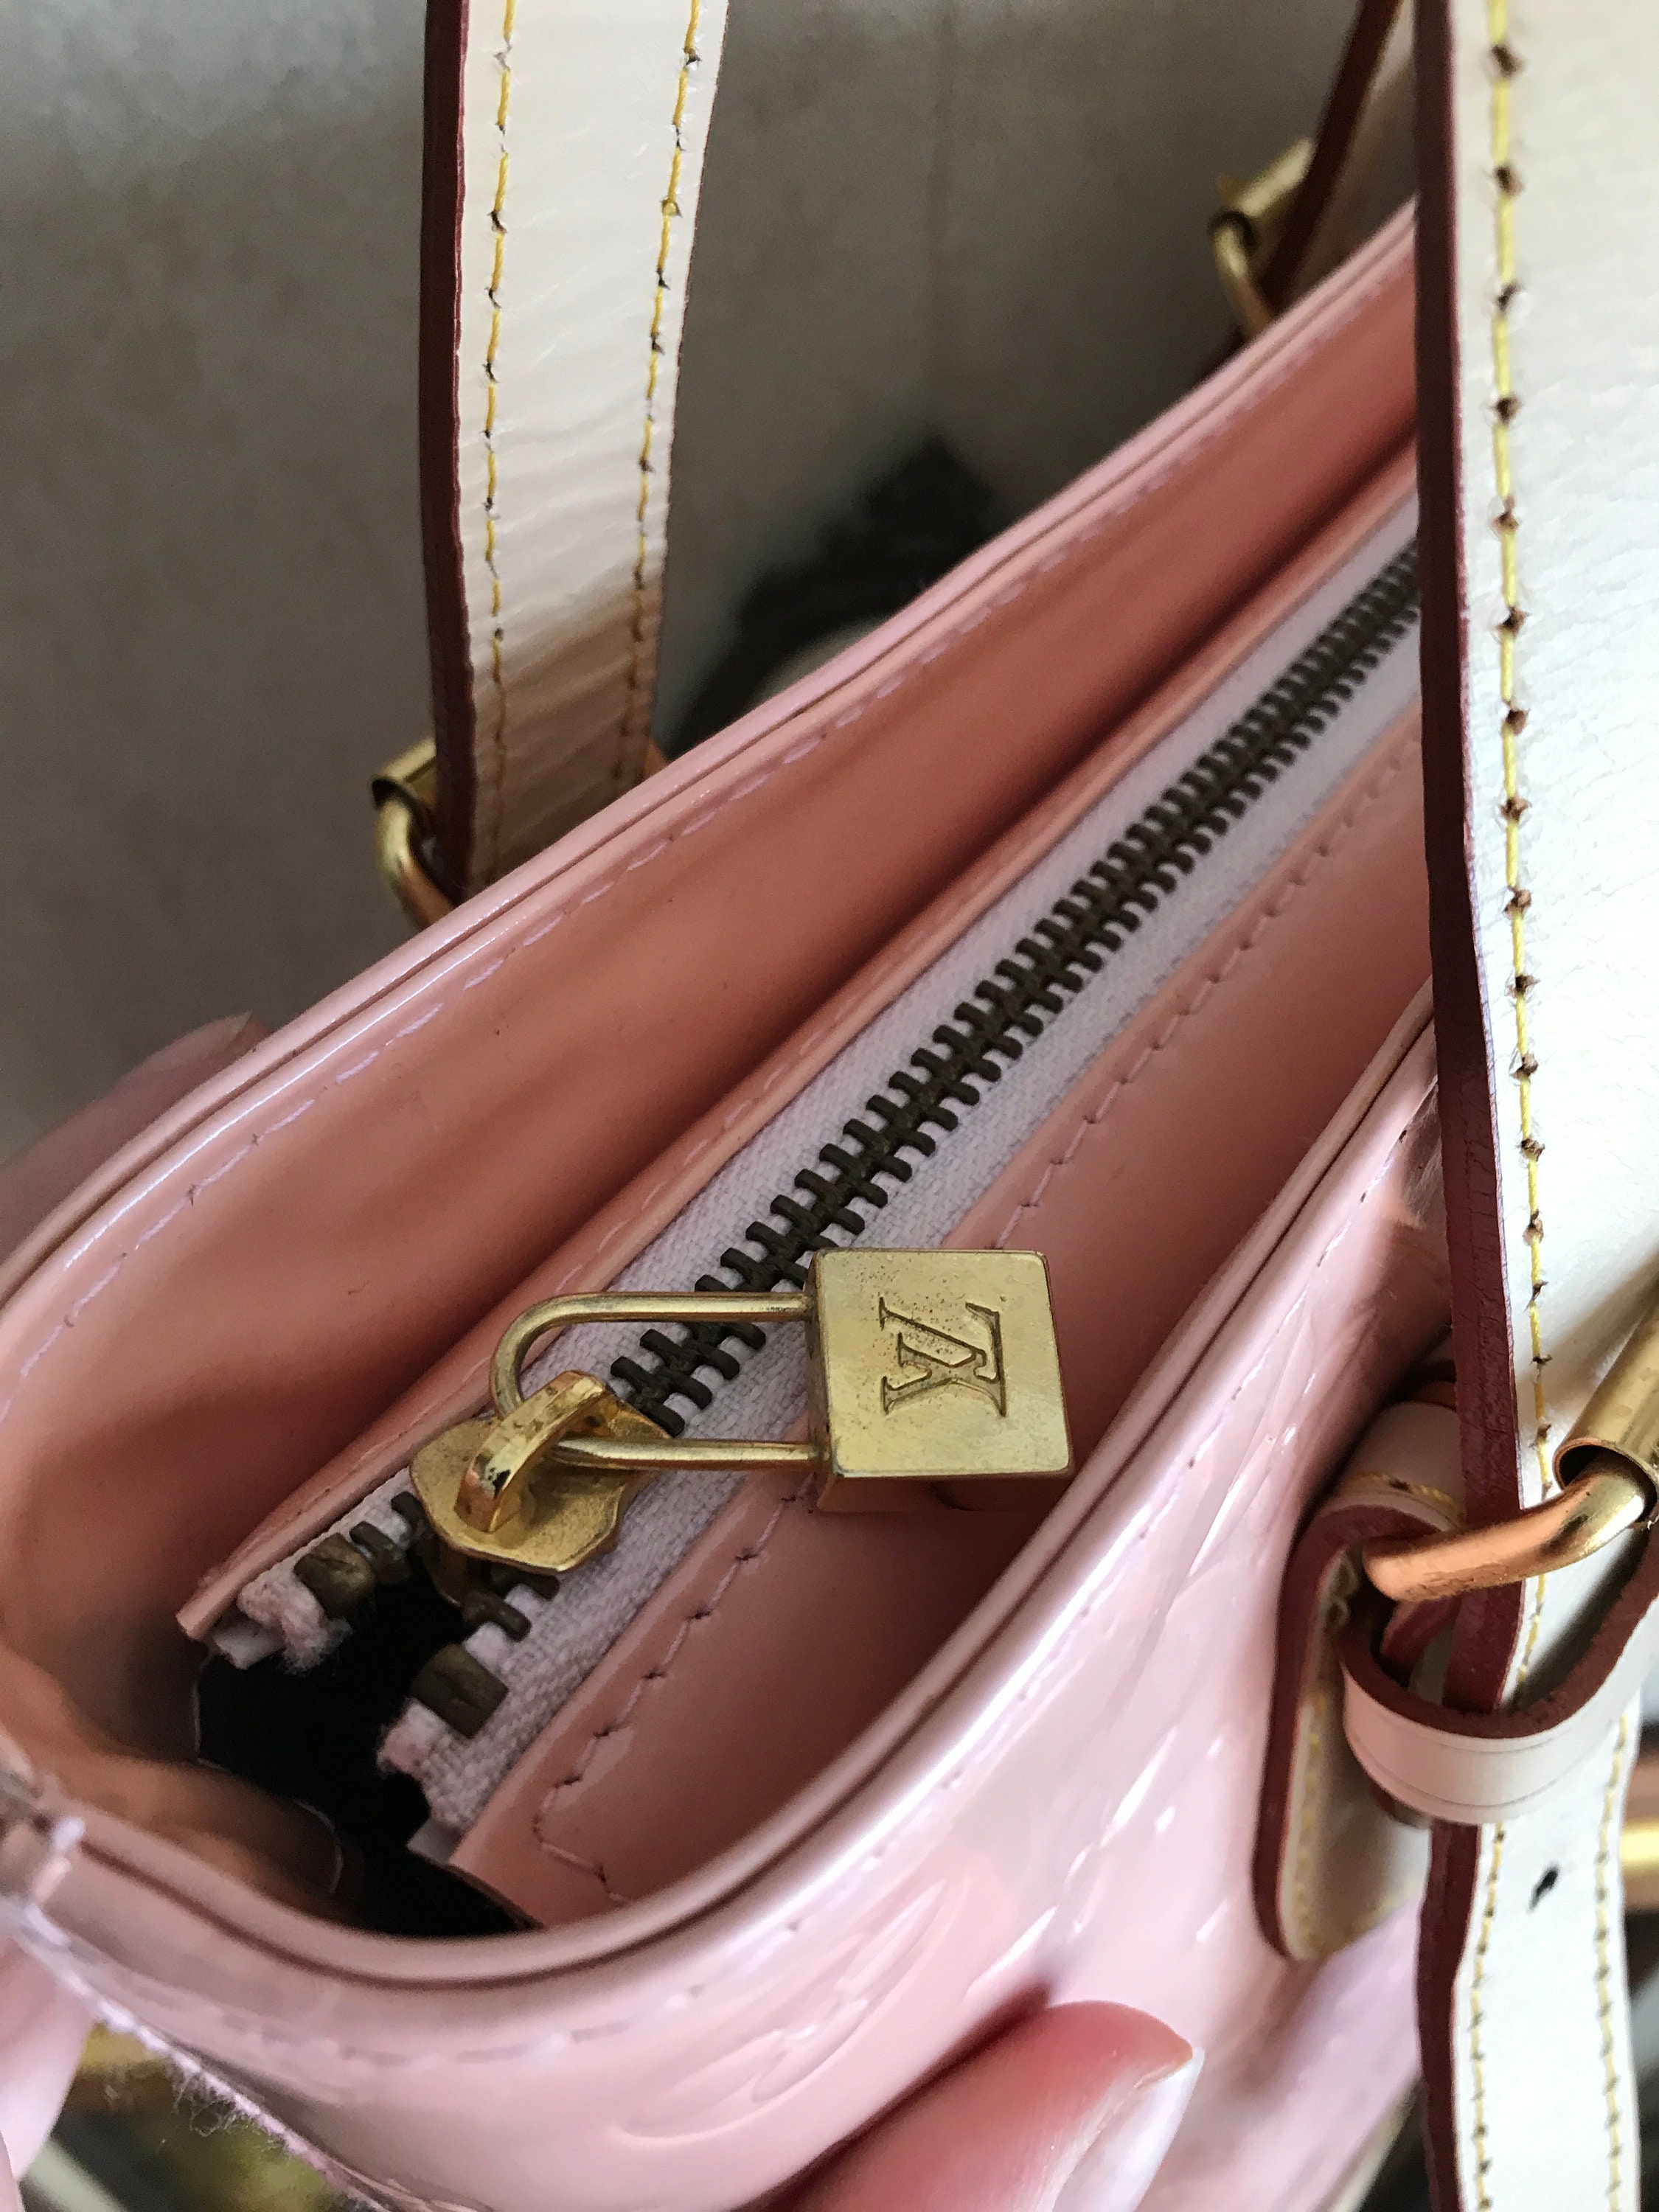 80s Vintage LOUIS VUITTON Bag Light Pink Leather Bag 